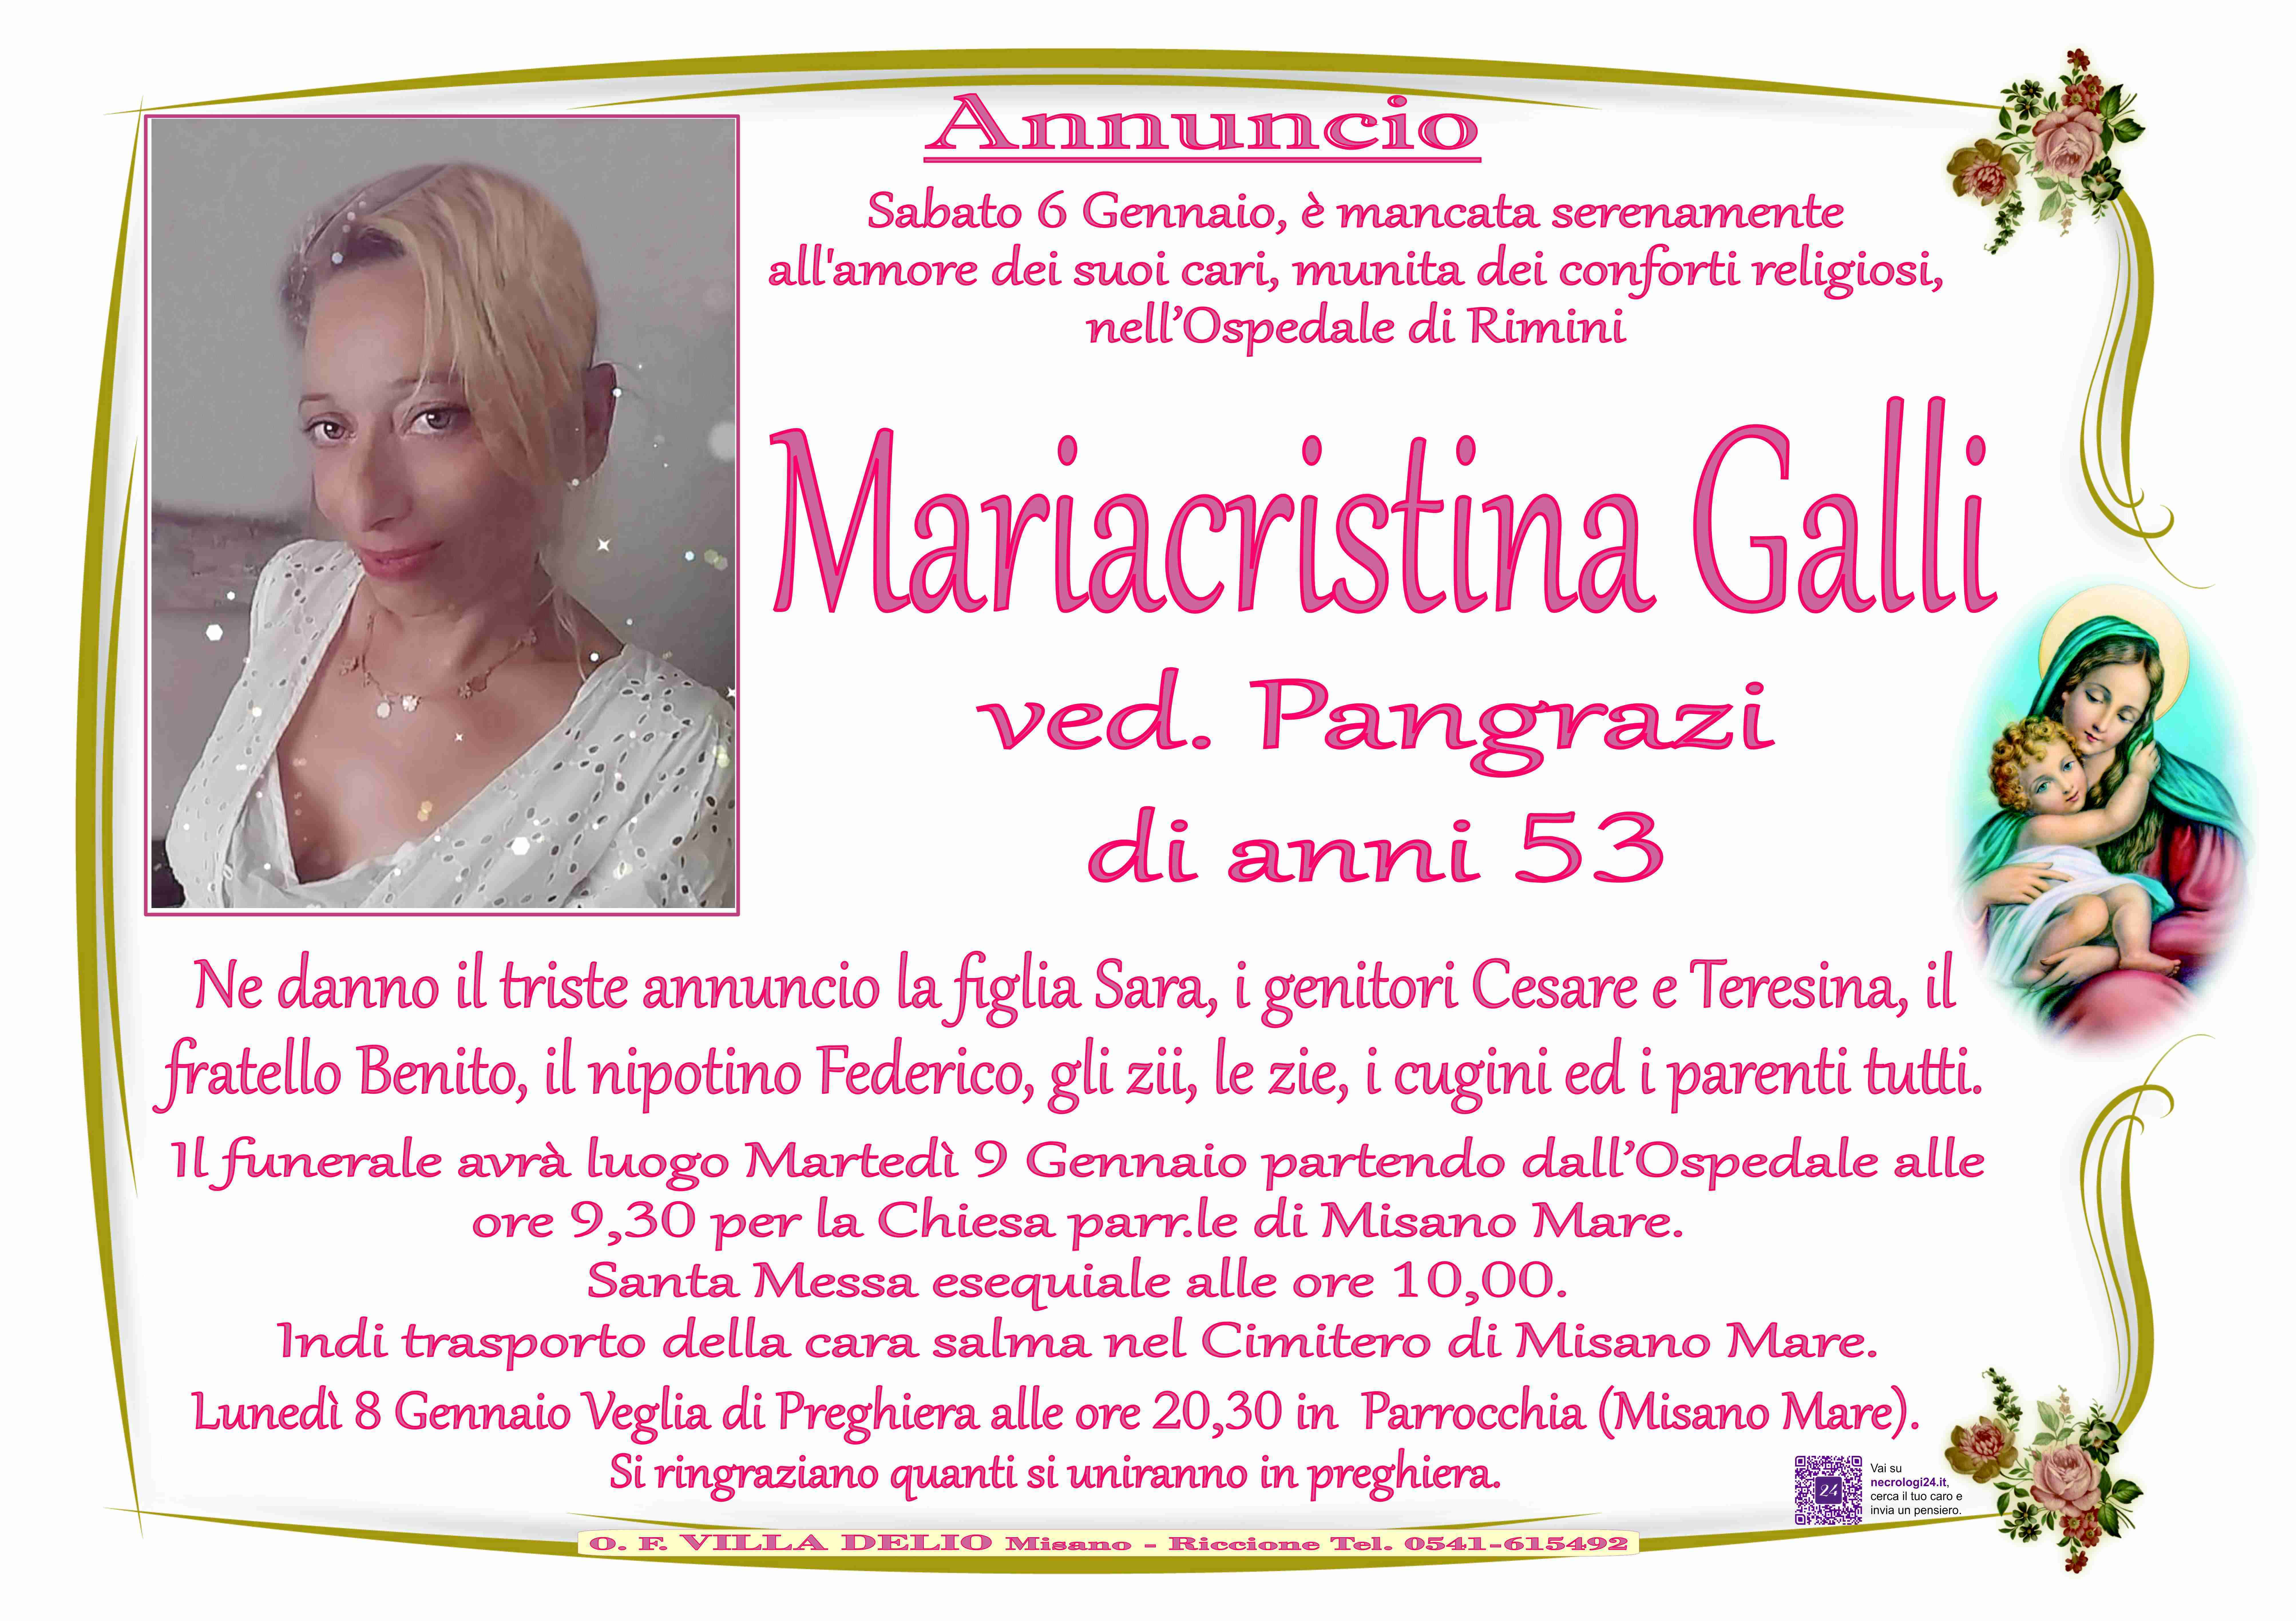 Mariacristina Galli